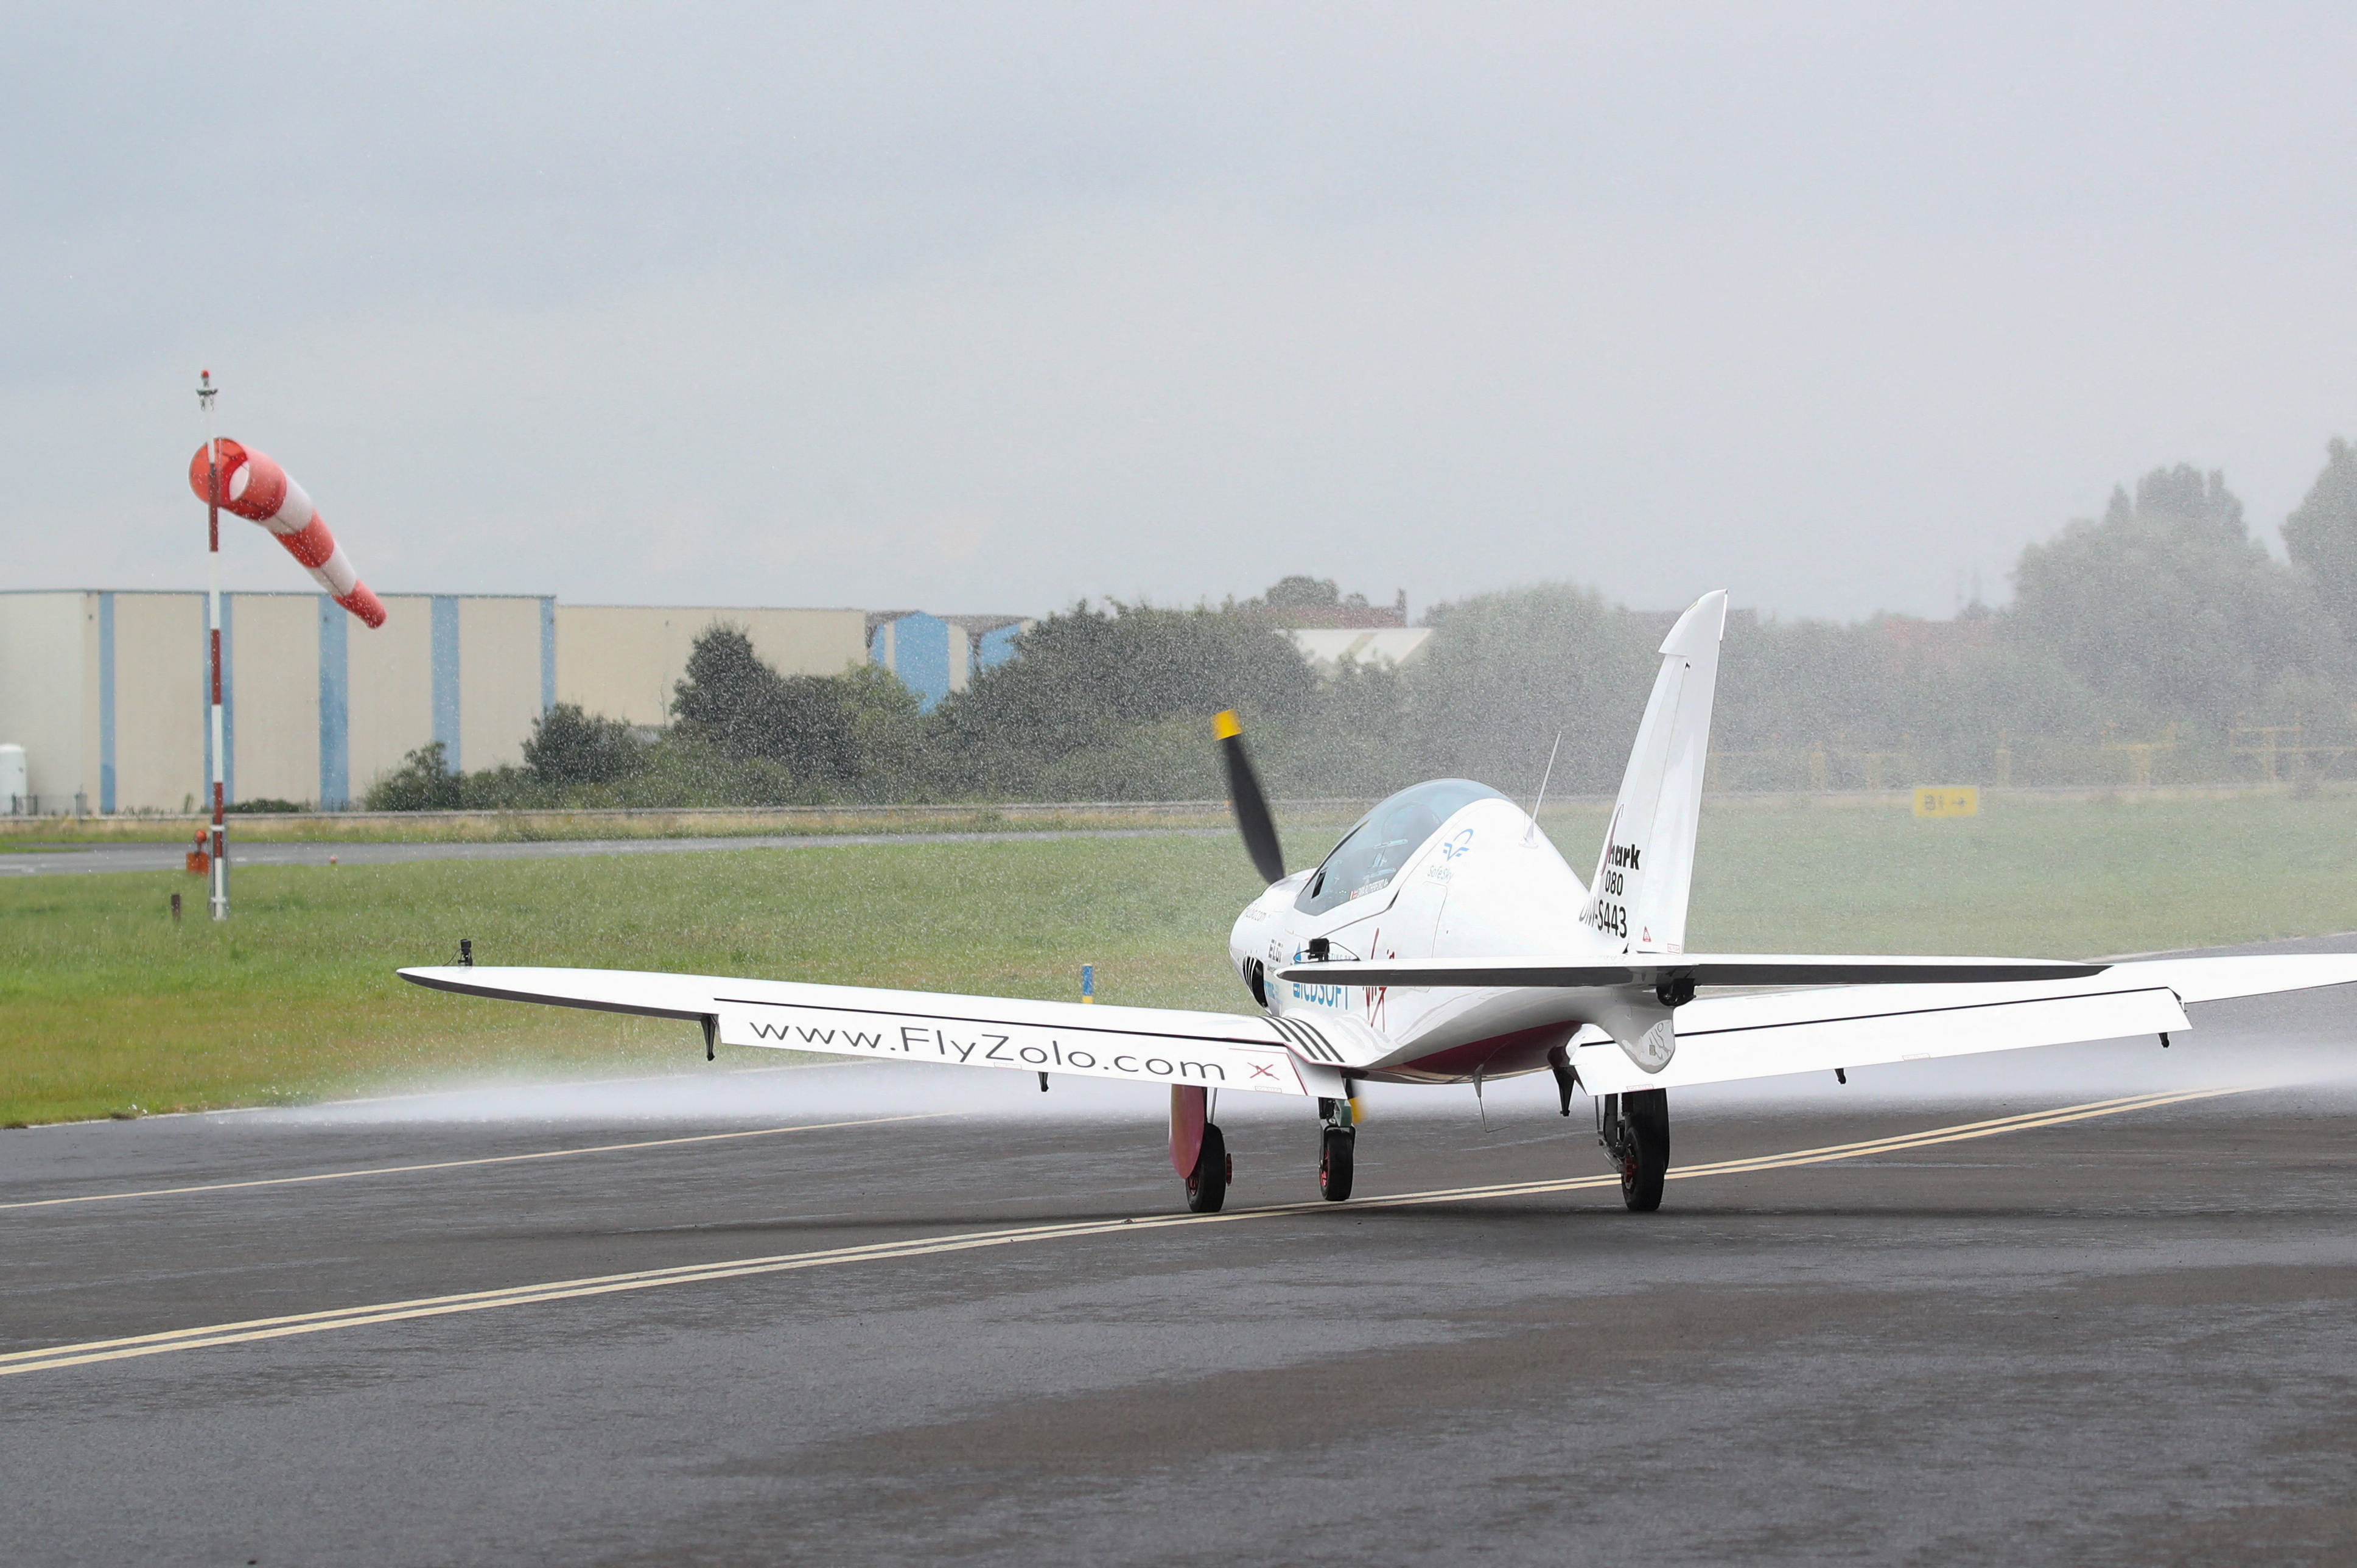 Belgian-British pilot Zara Rutherford aims to set aviation record, in Wevelgem